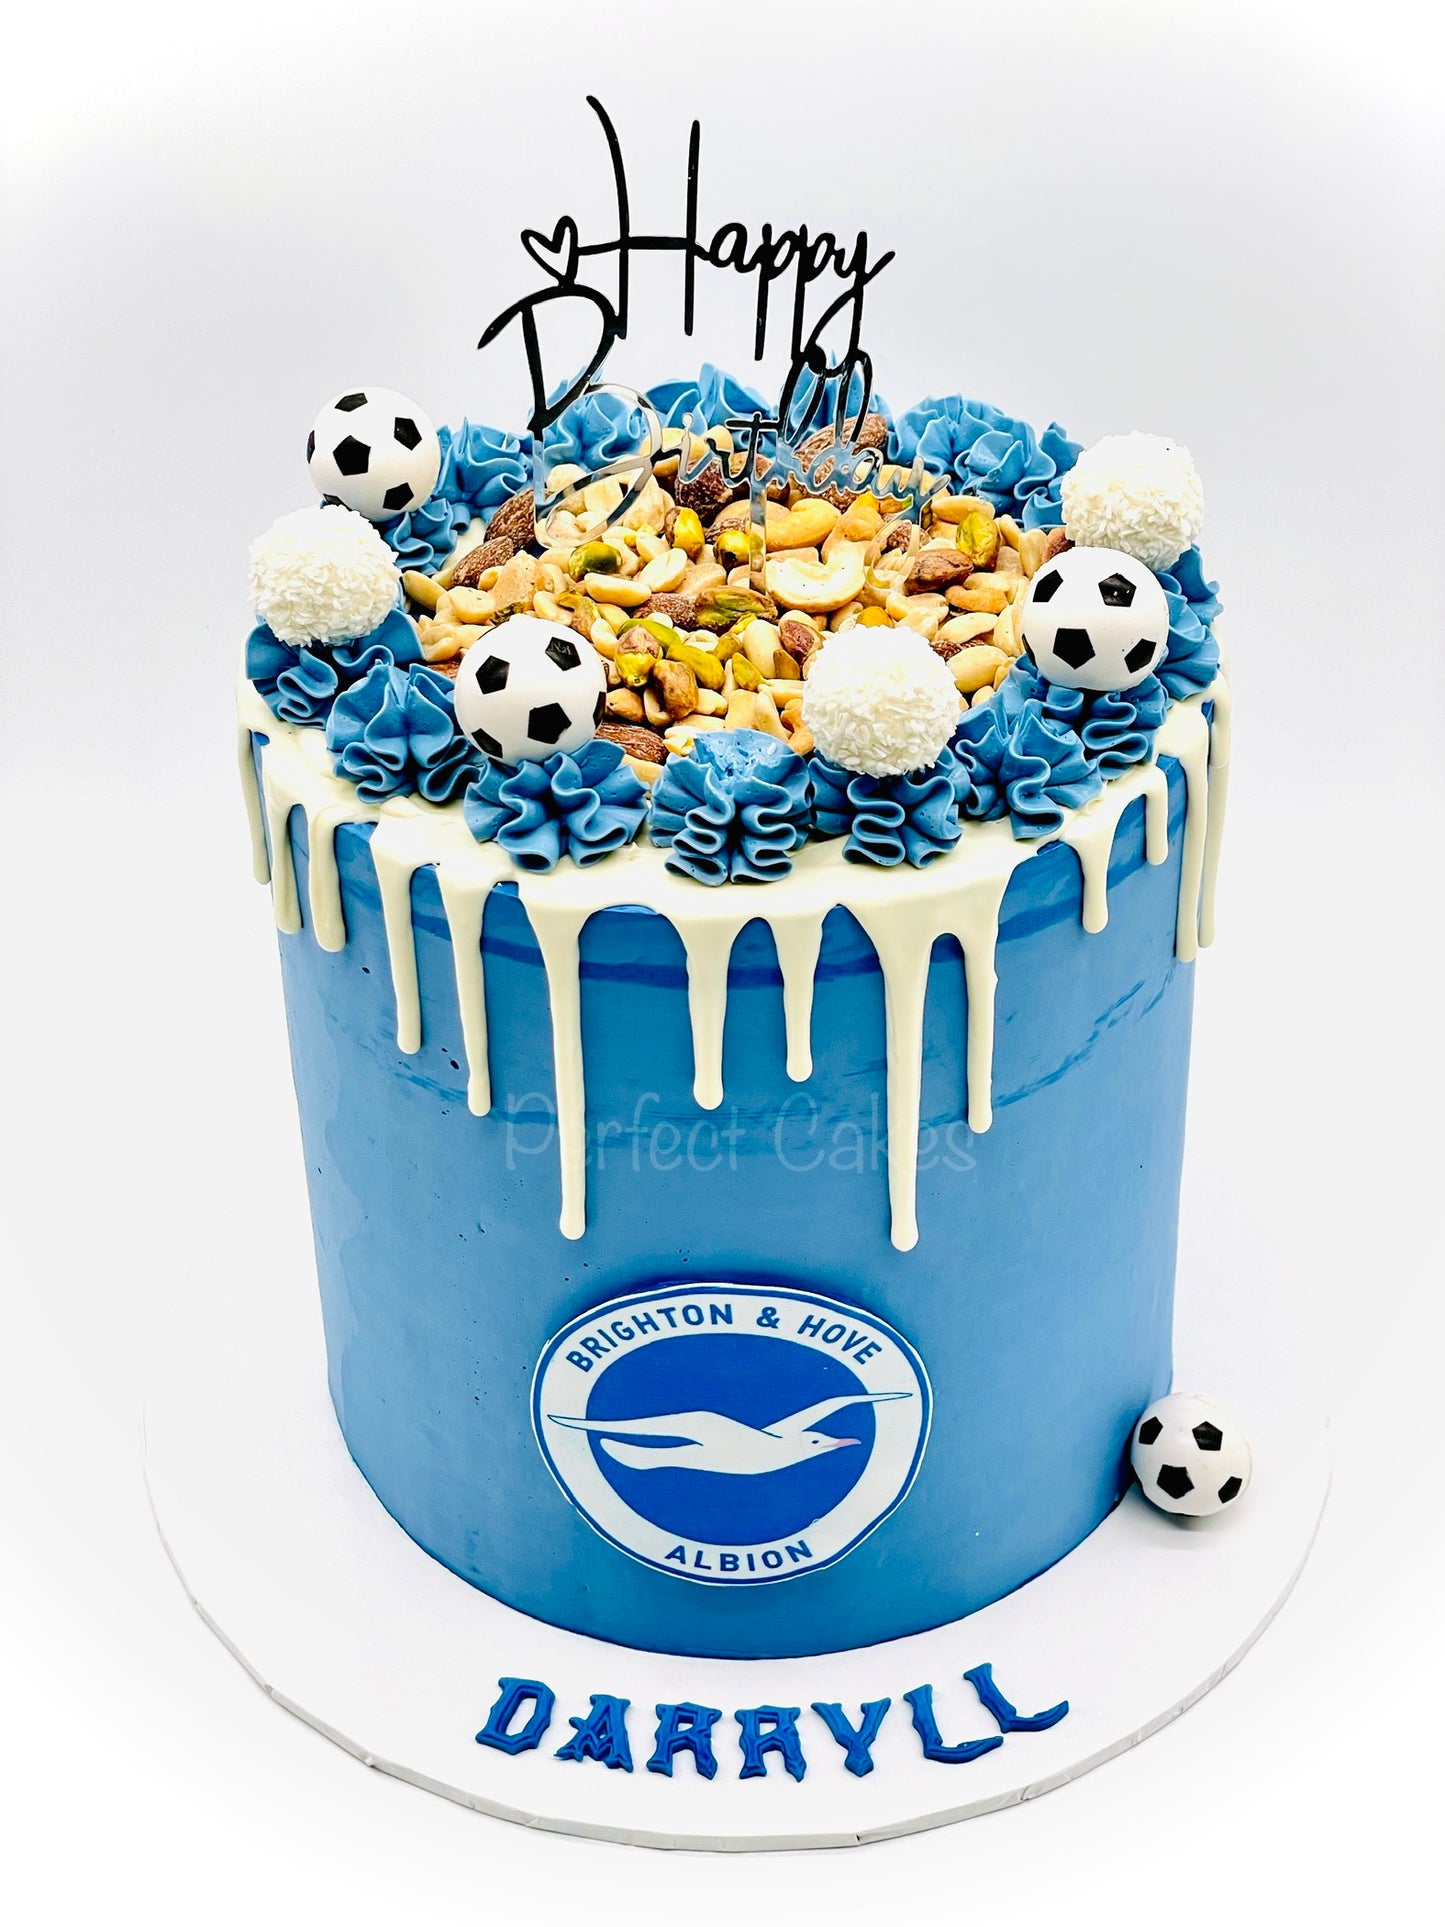 Football Soccer Theme Cake